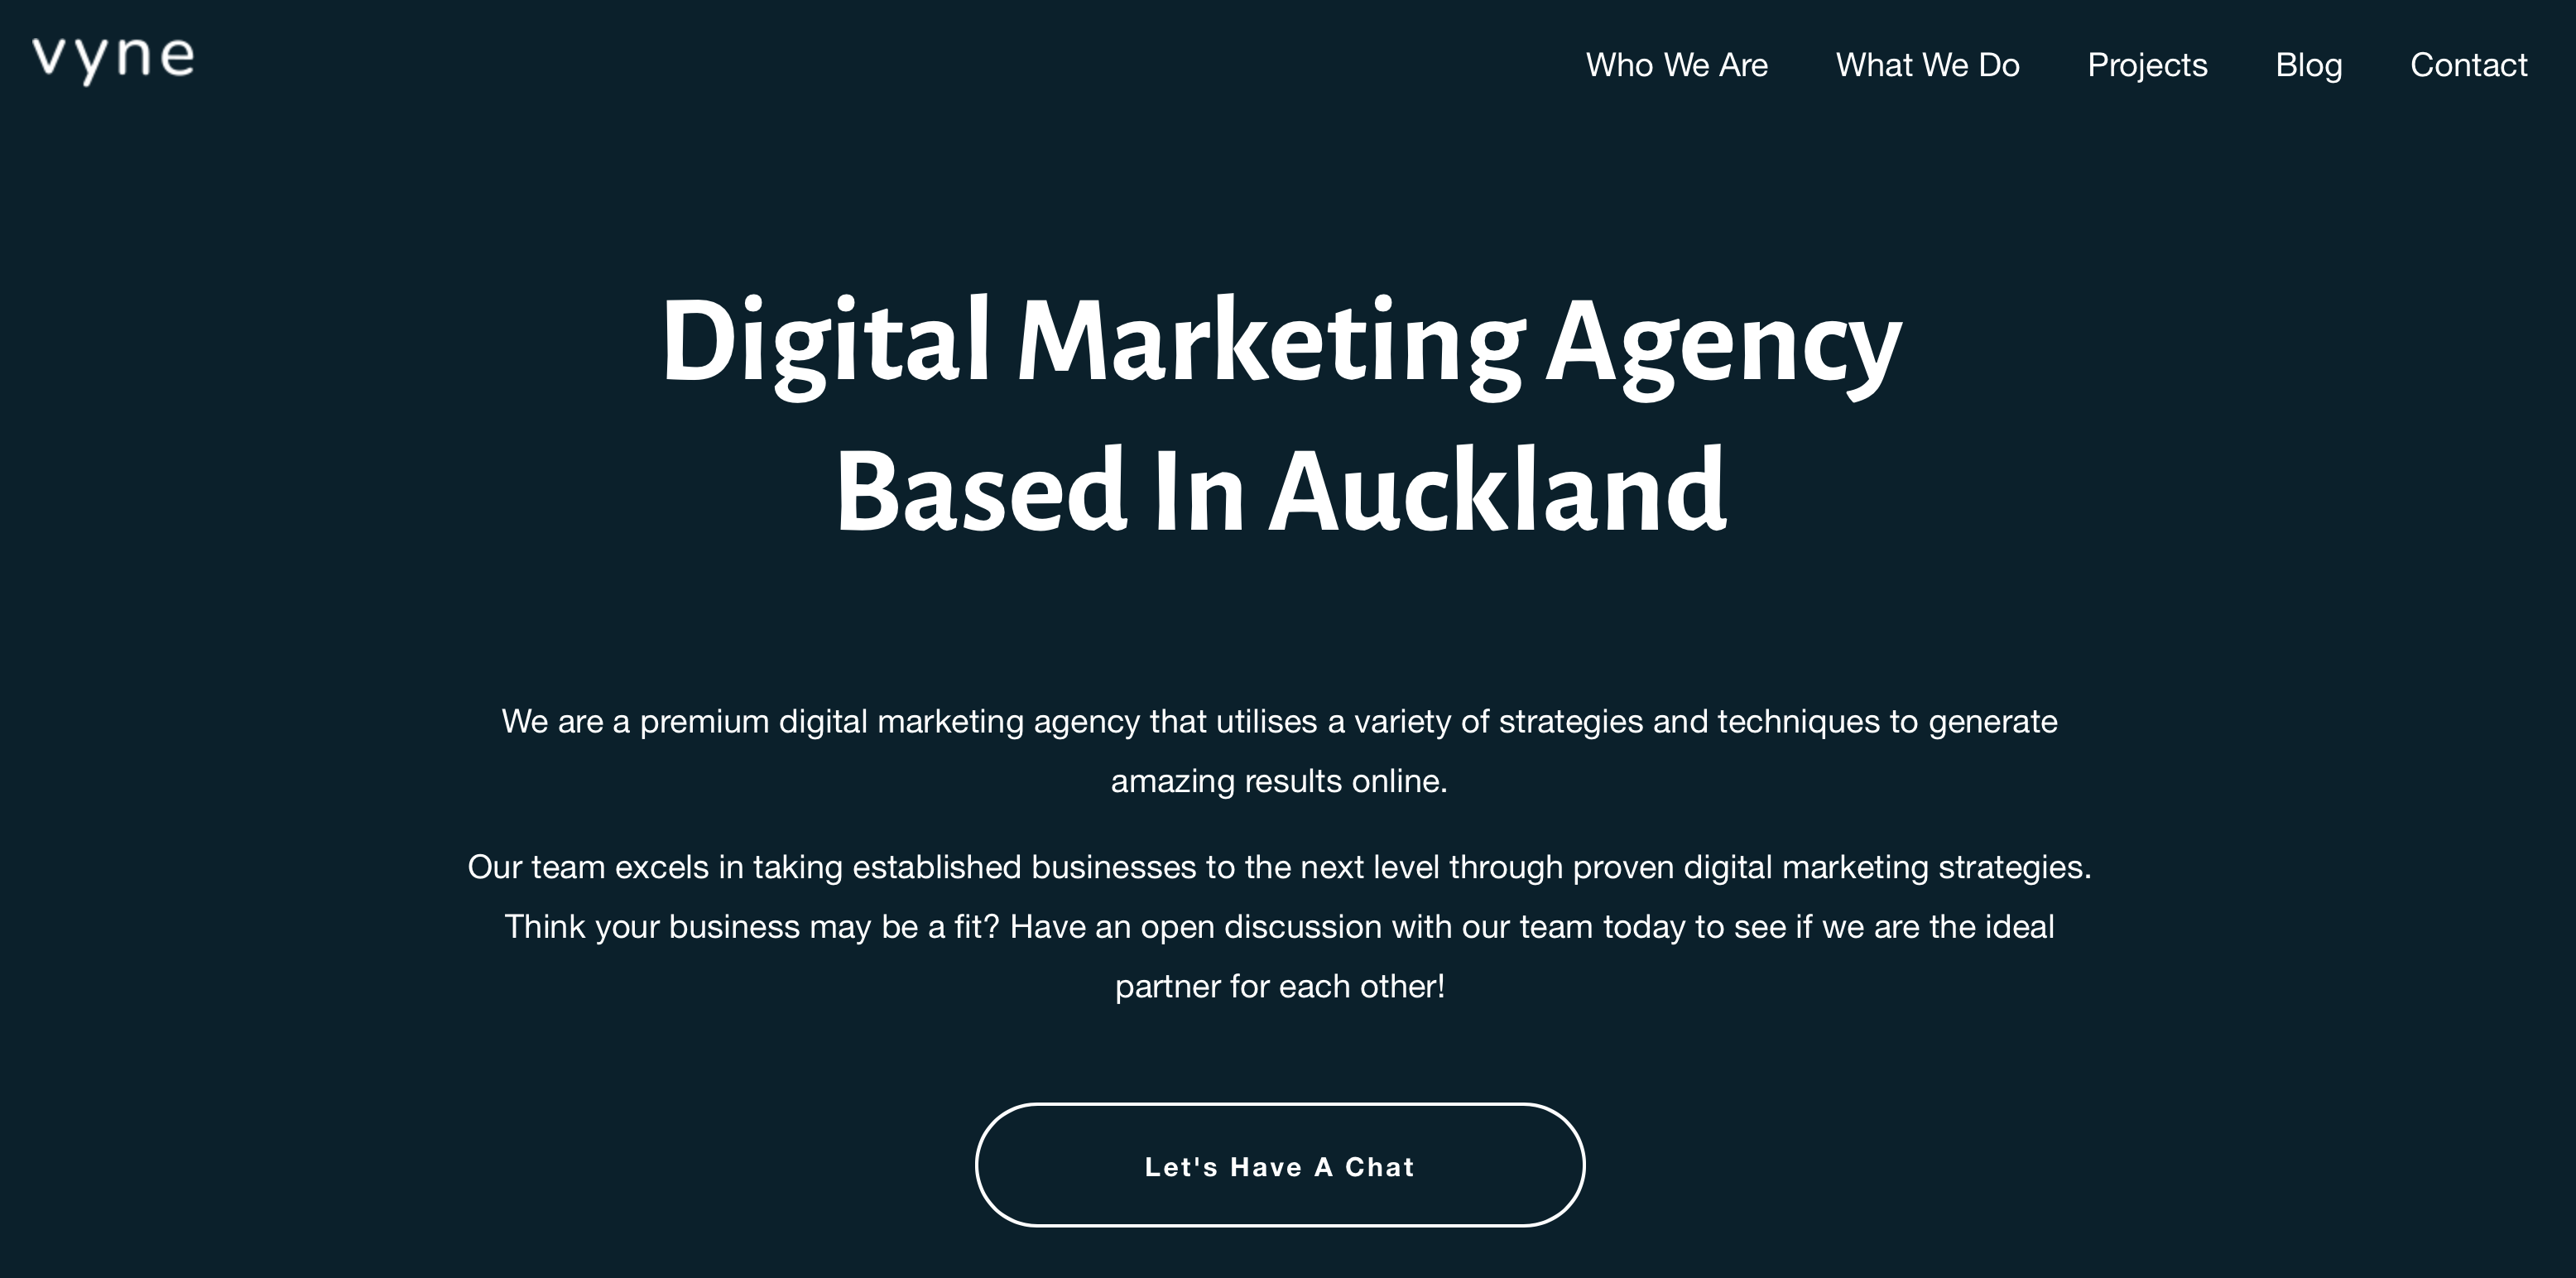 Digital Marketing Agency Auckland, Vyne